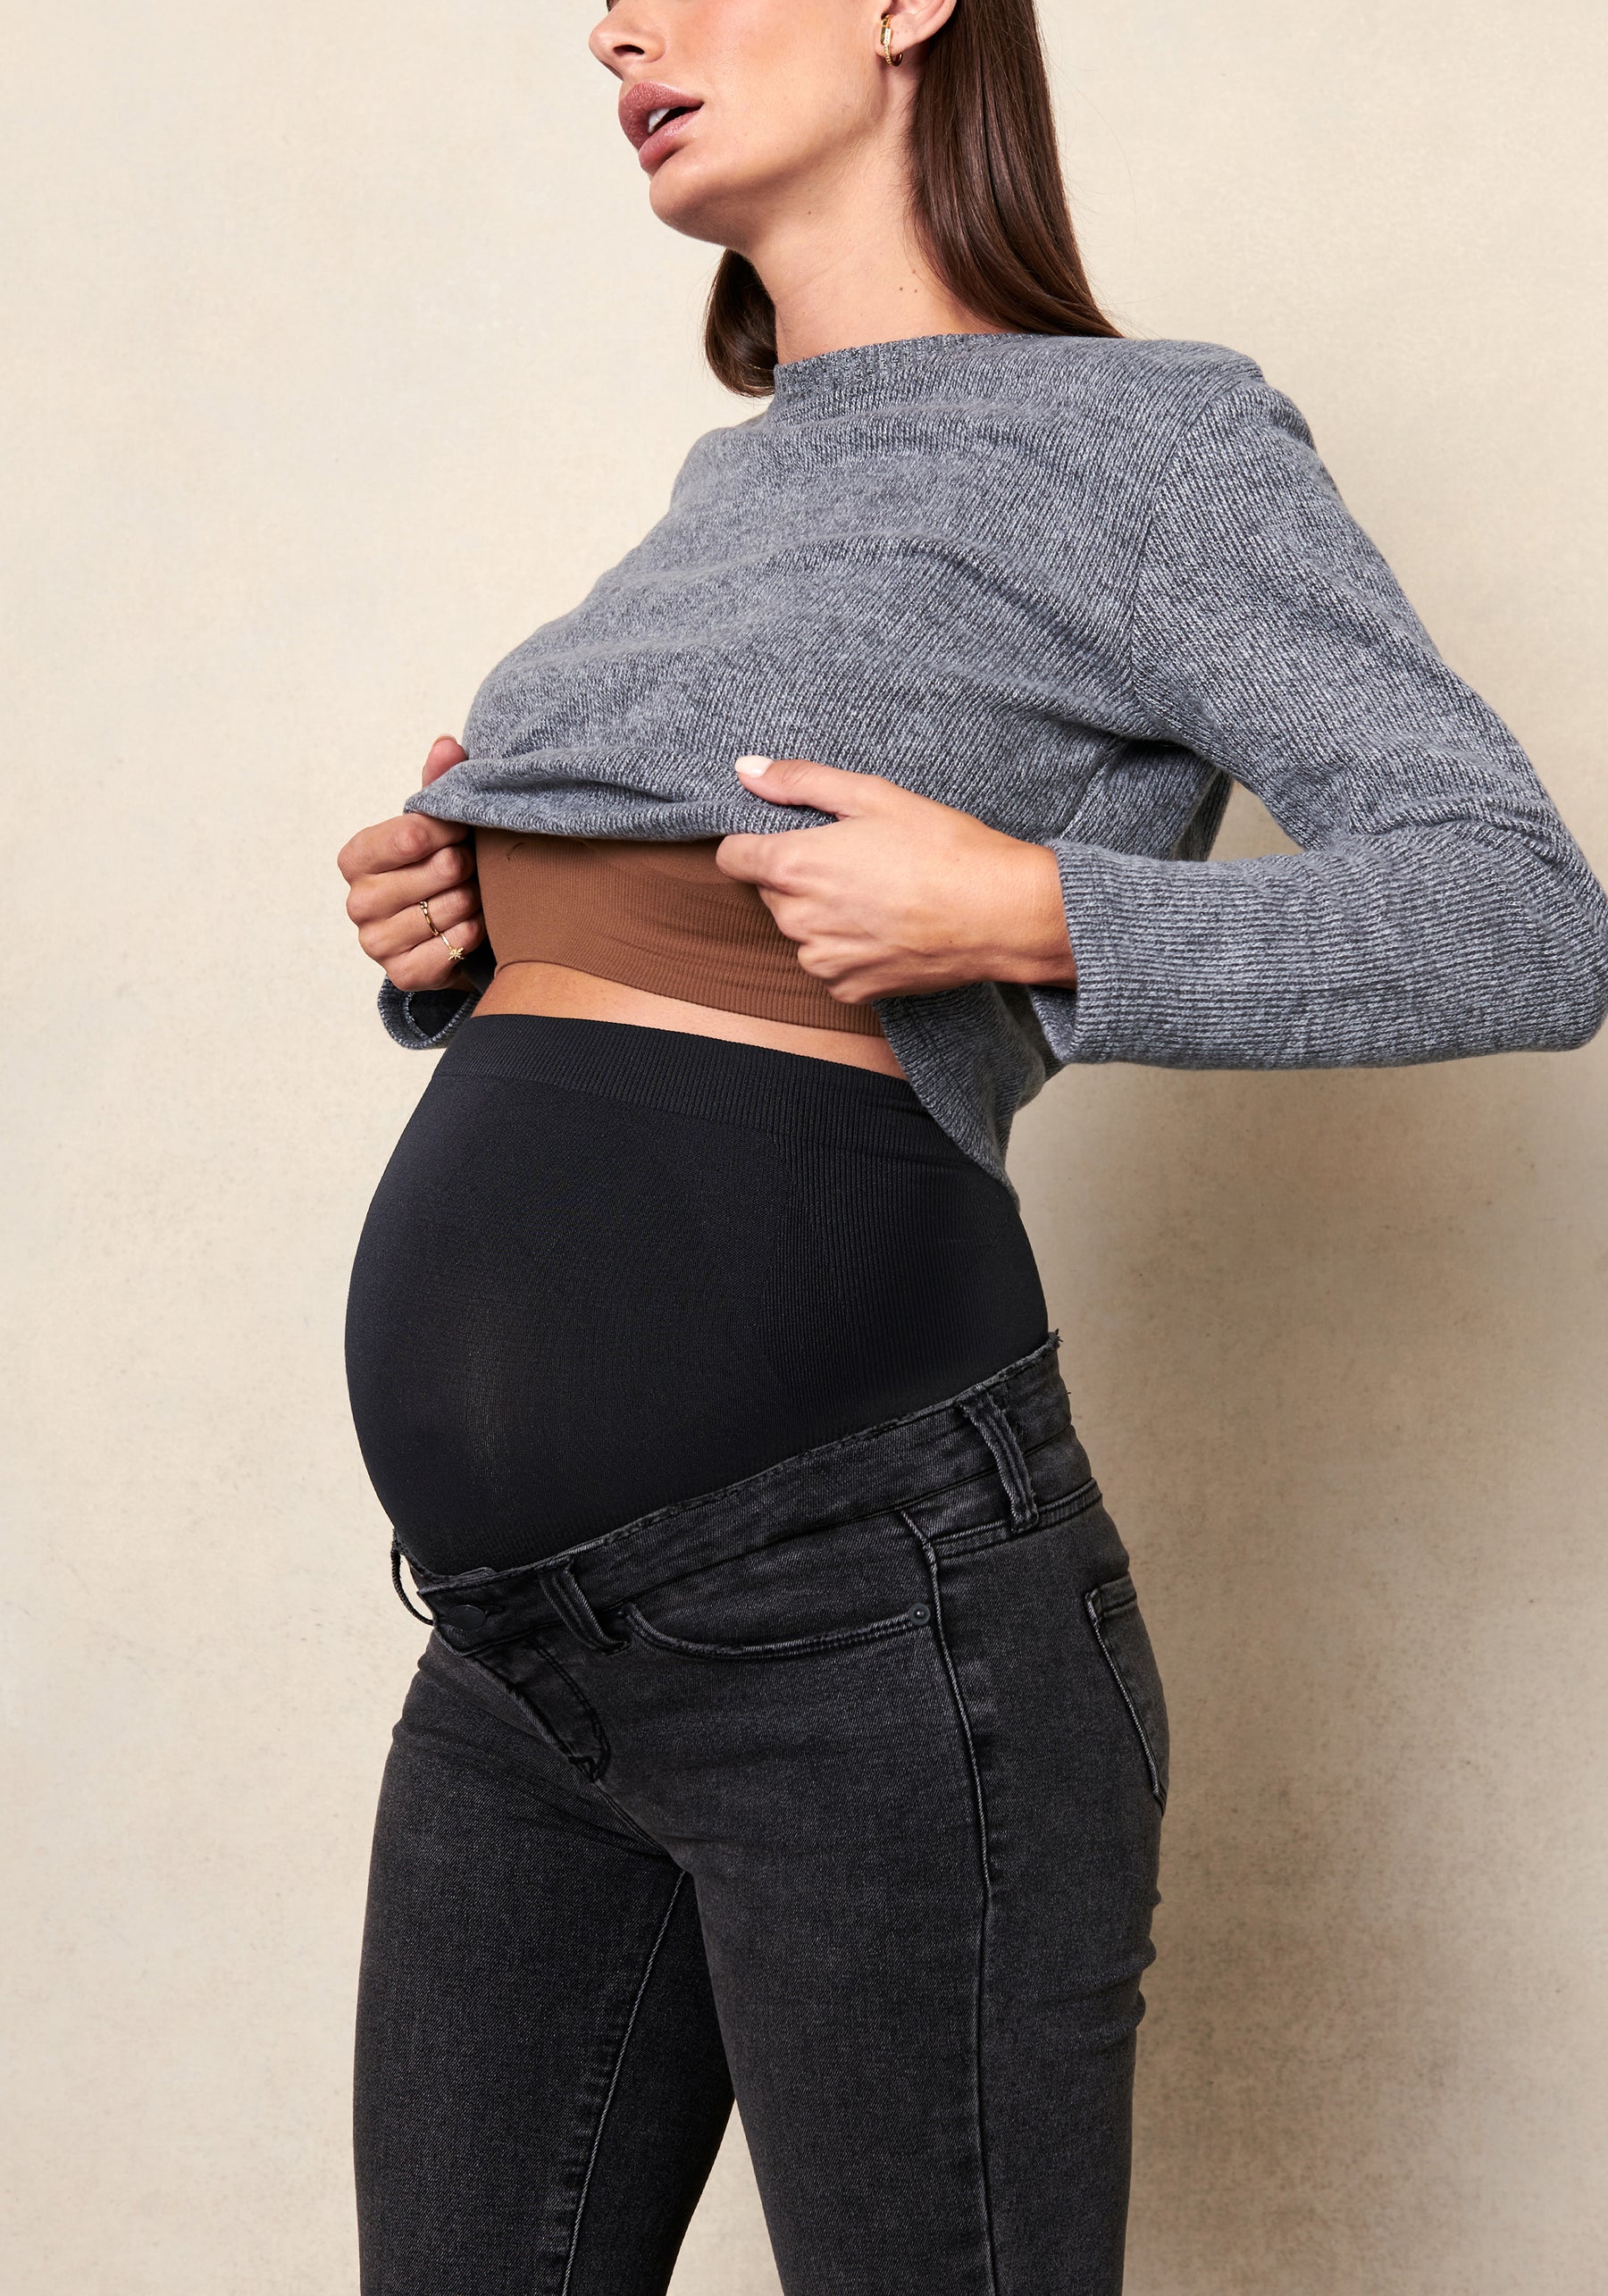 Under Belly Skinny Maternity Jeans - Isabel Maternity by Ingrid & Isabel™  Dark Wash 16